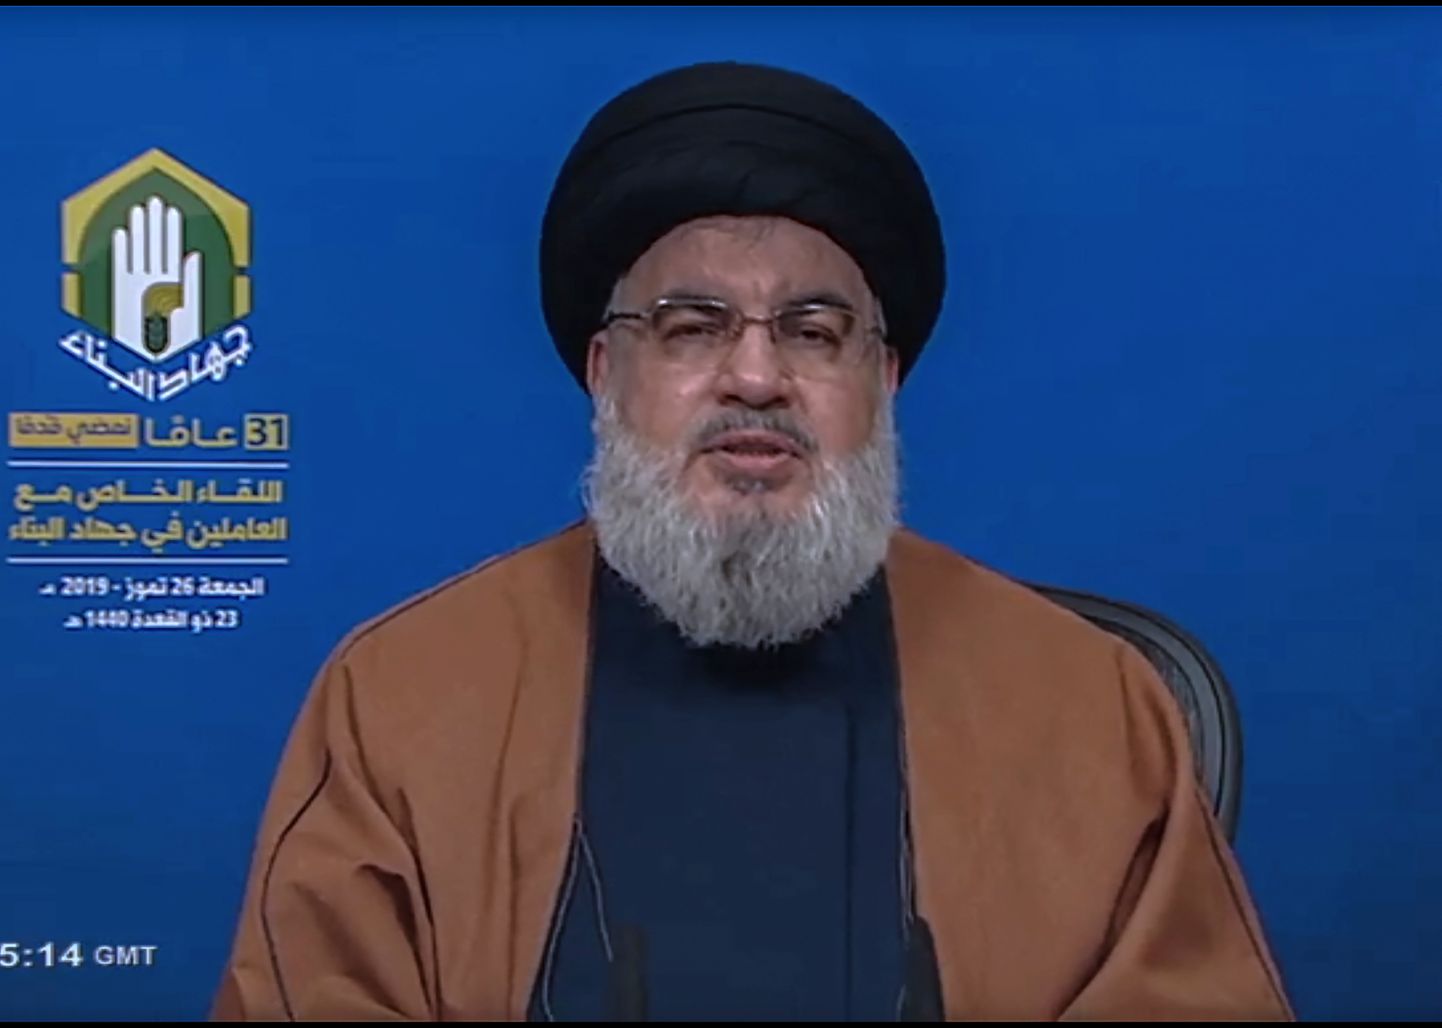 Liibanoni šiialiikumise Hizbollah liider Hassan Nasrallah.